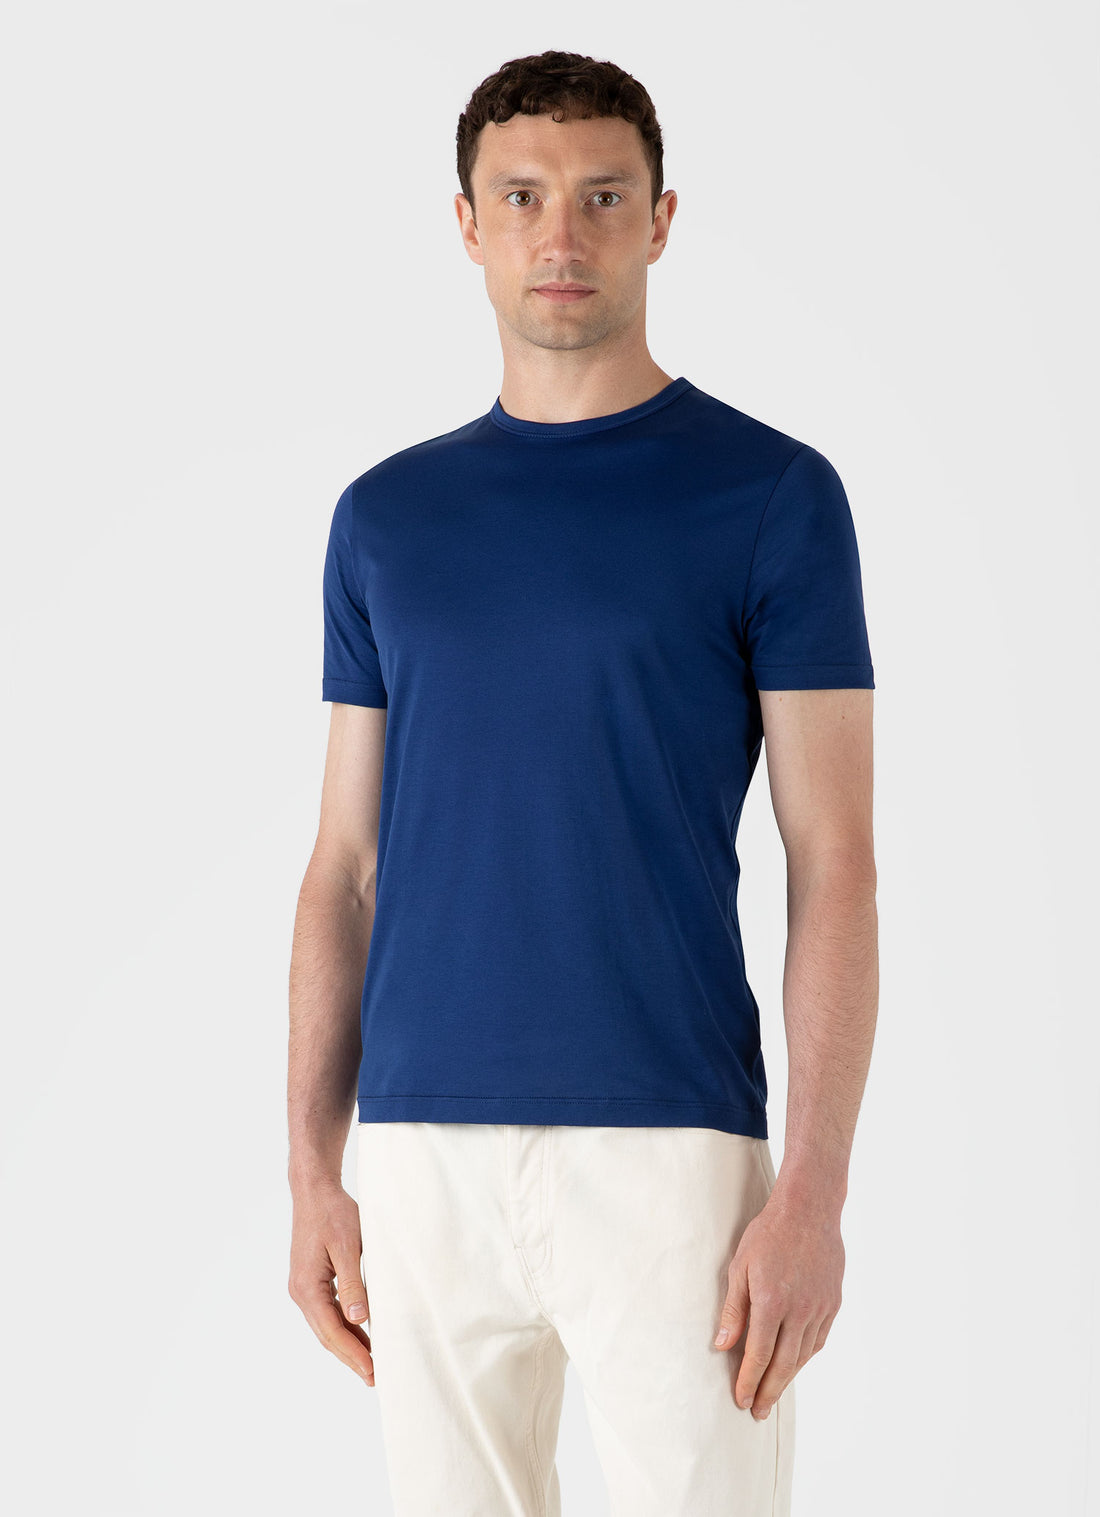 Men's Classic T-shirt in Space Blue